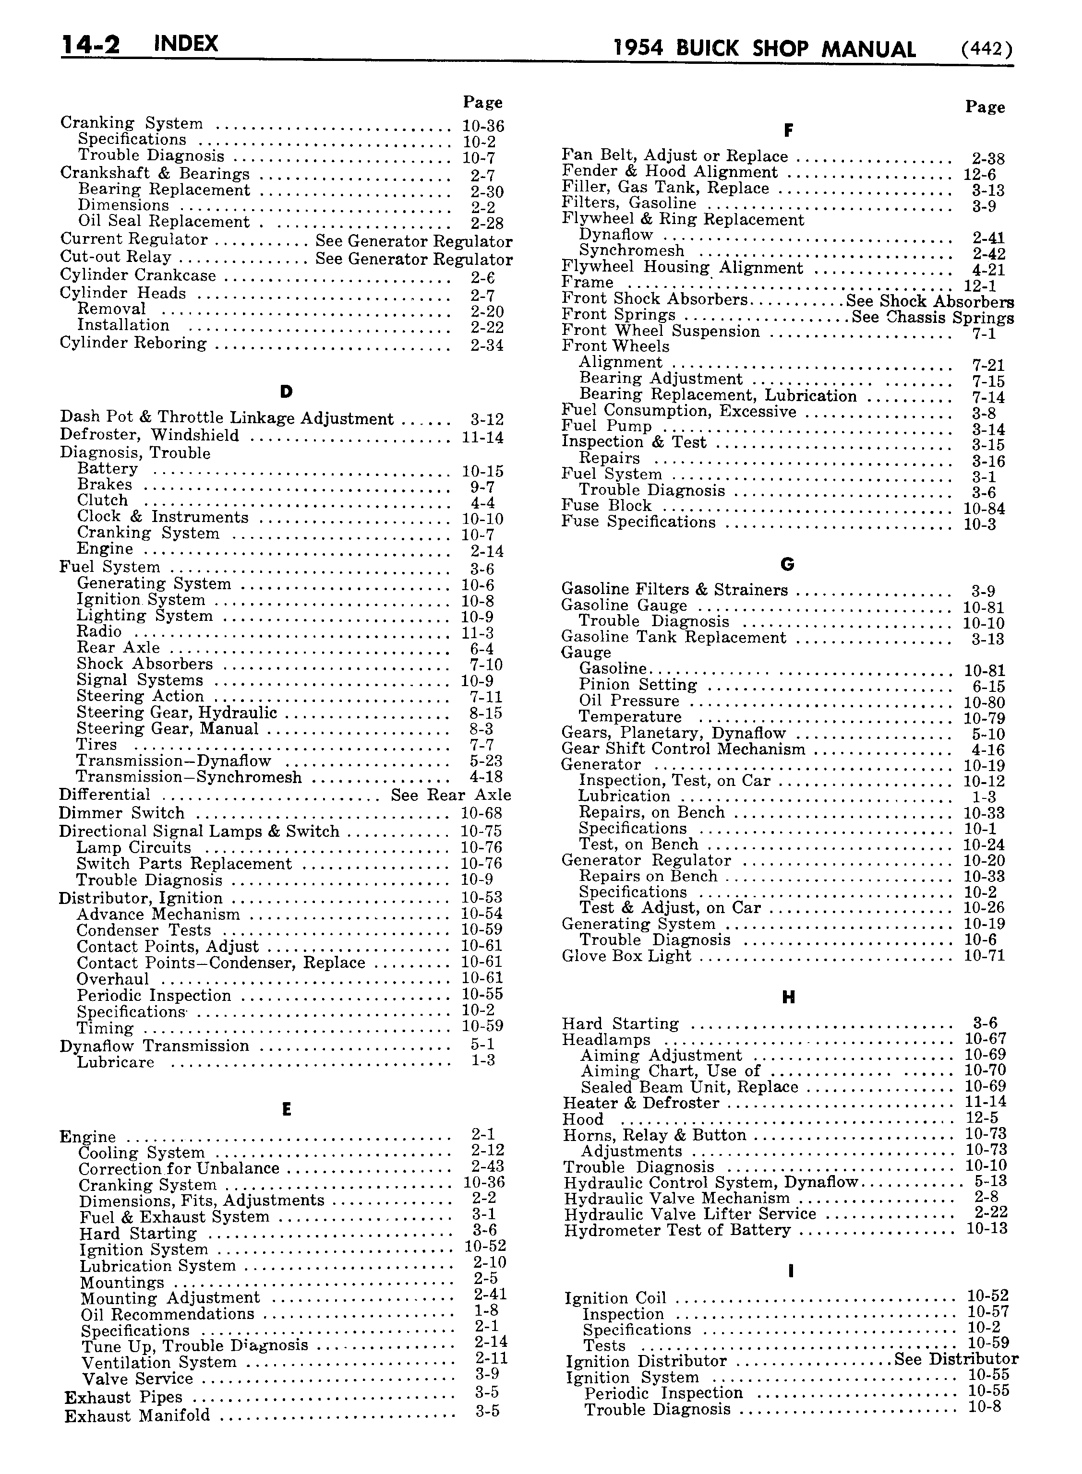 n_15 1954 Buick Shop Manual - Index-002-002.jpg